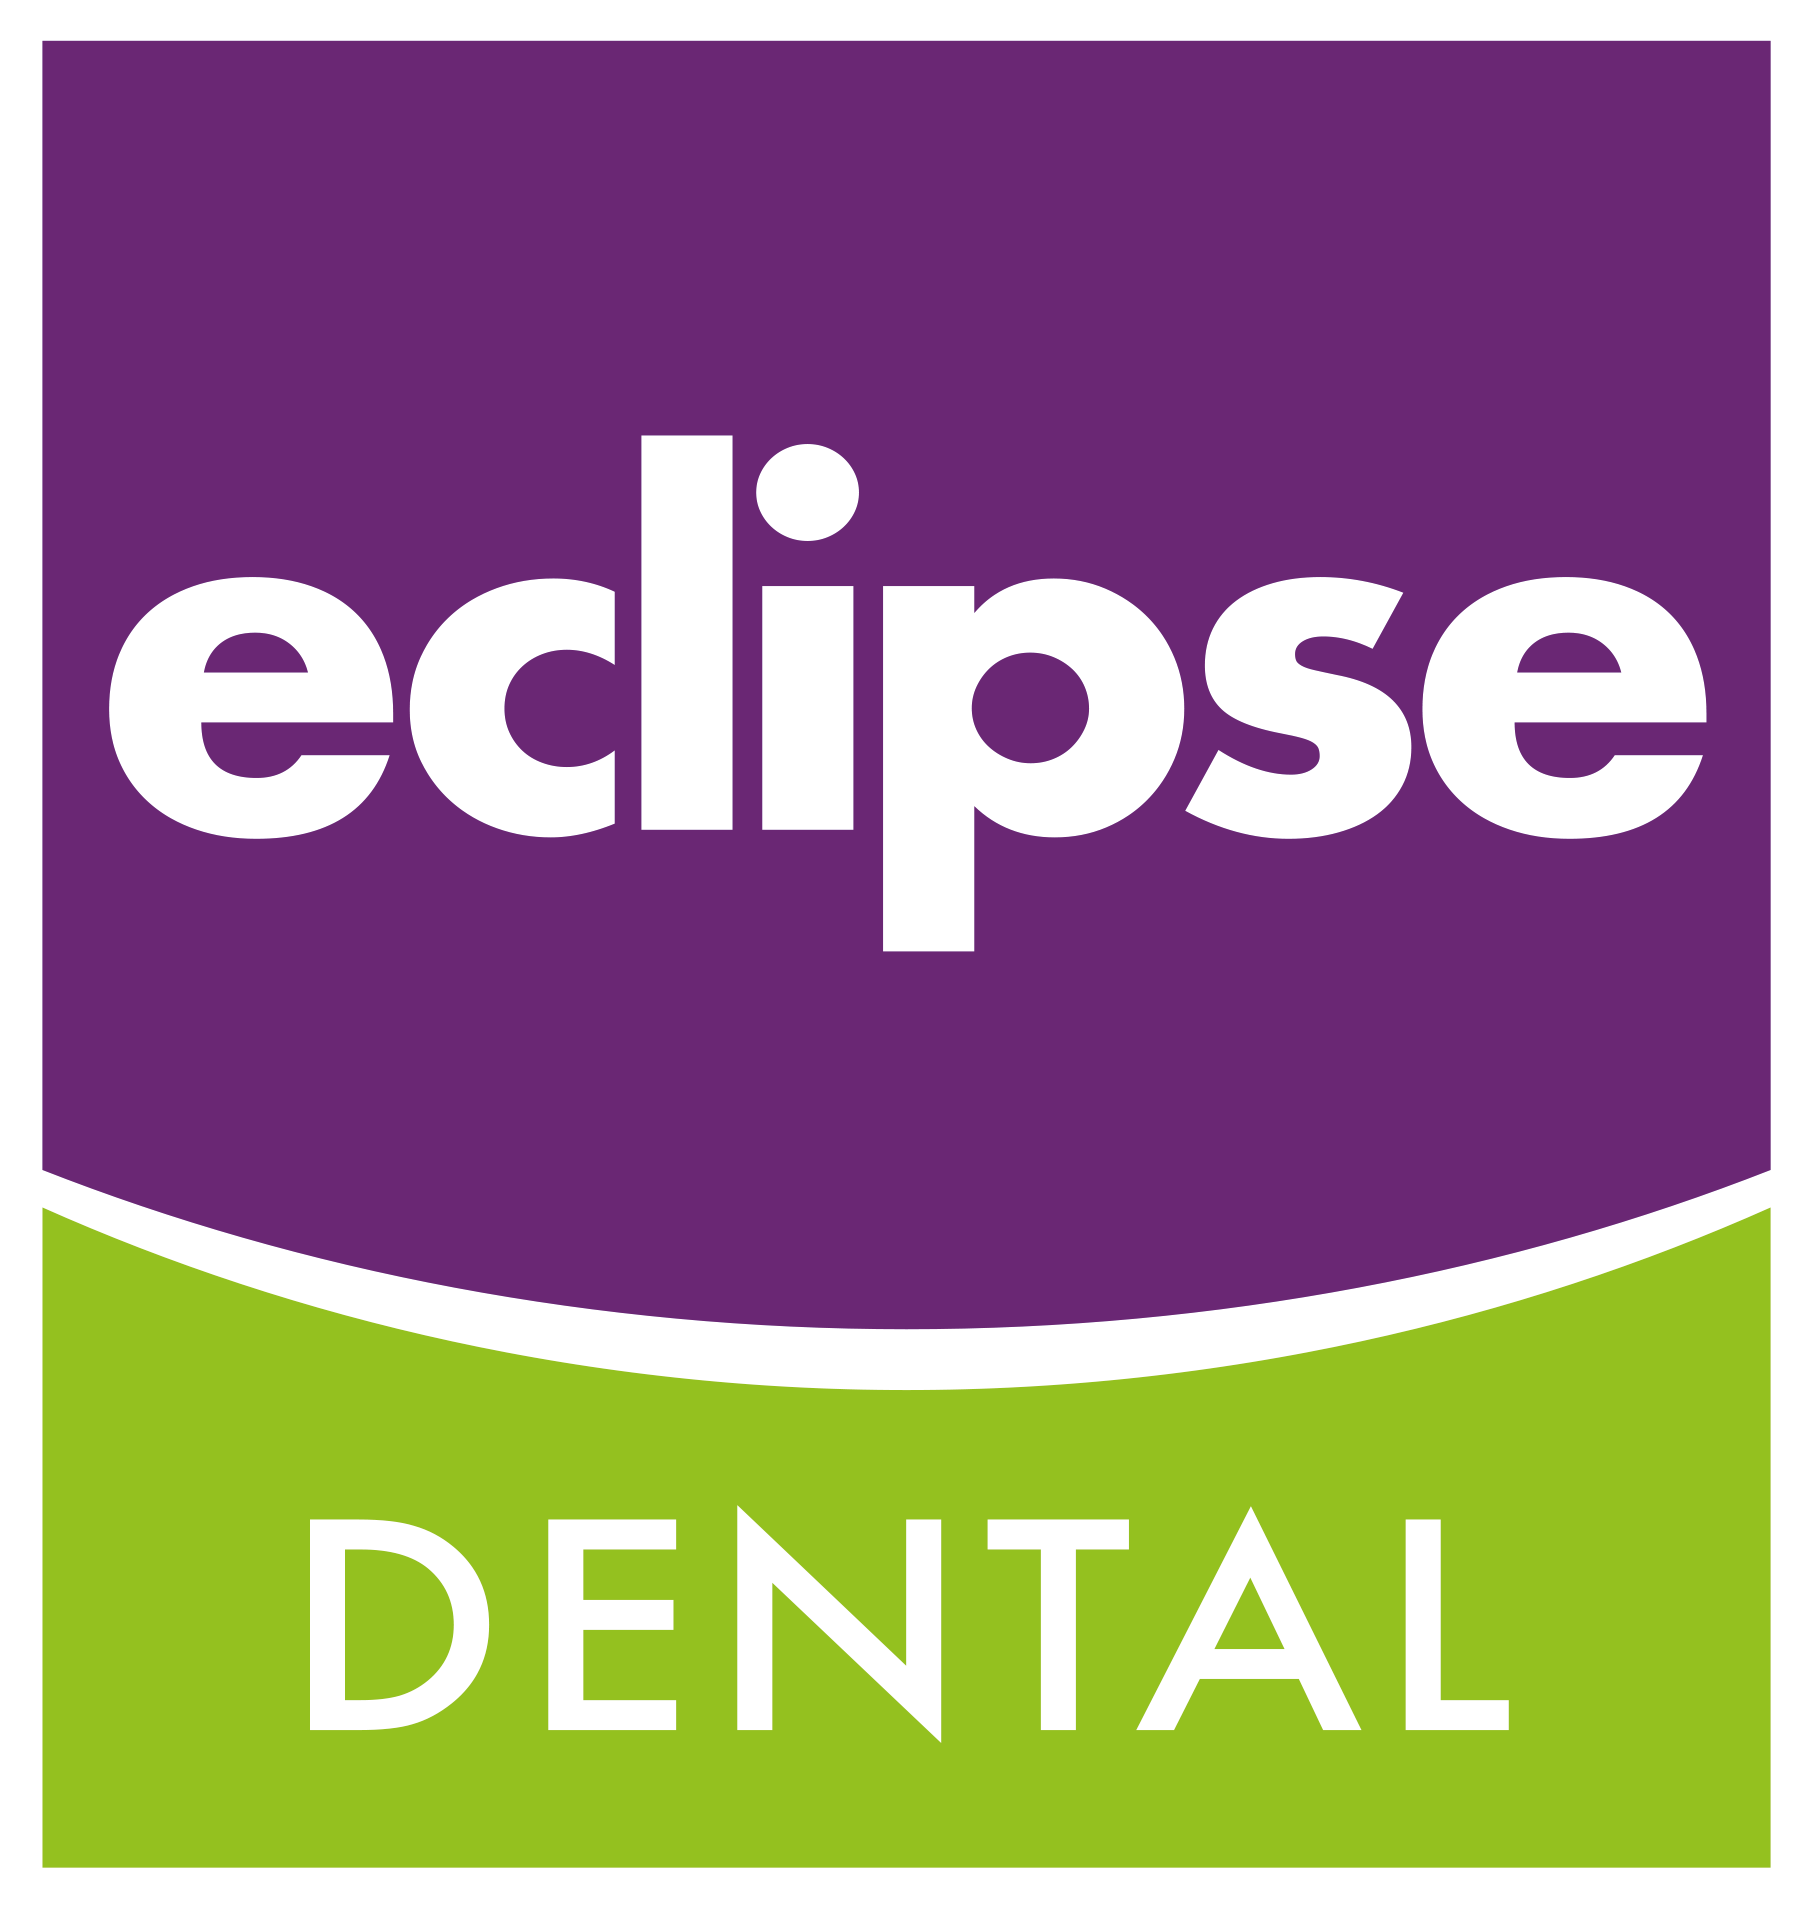 Eclipse Dental Engineering Ltd